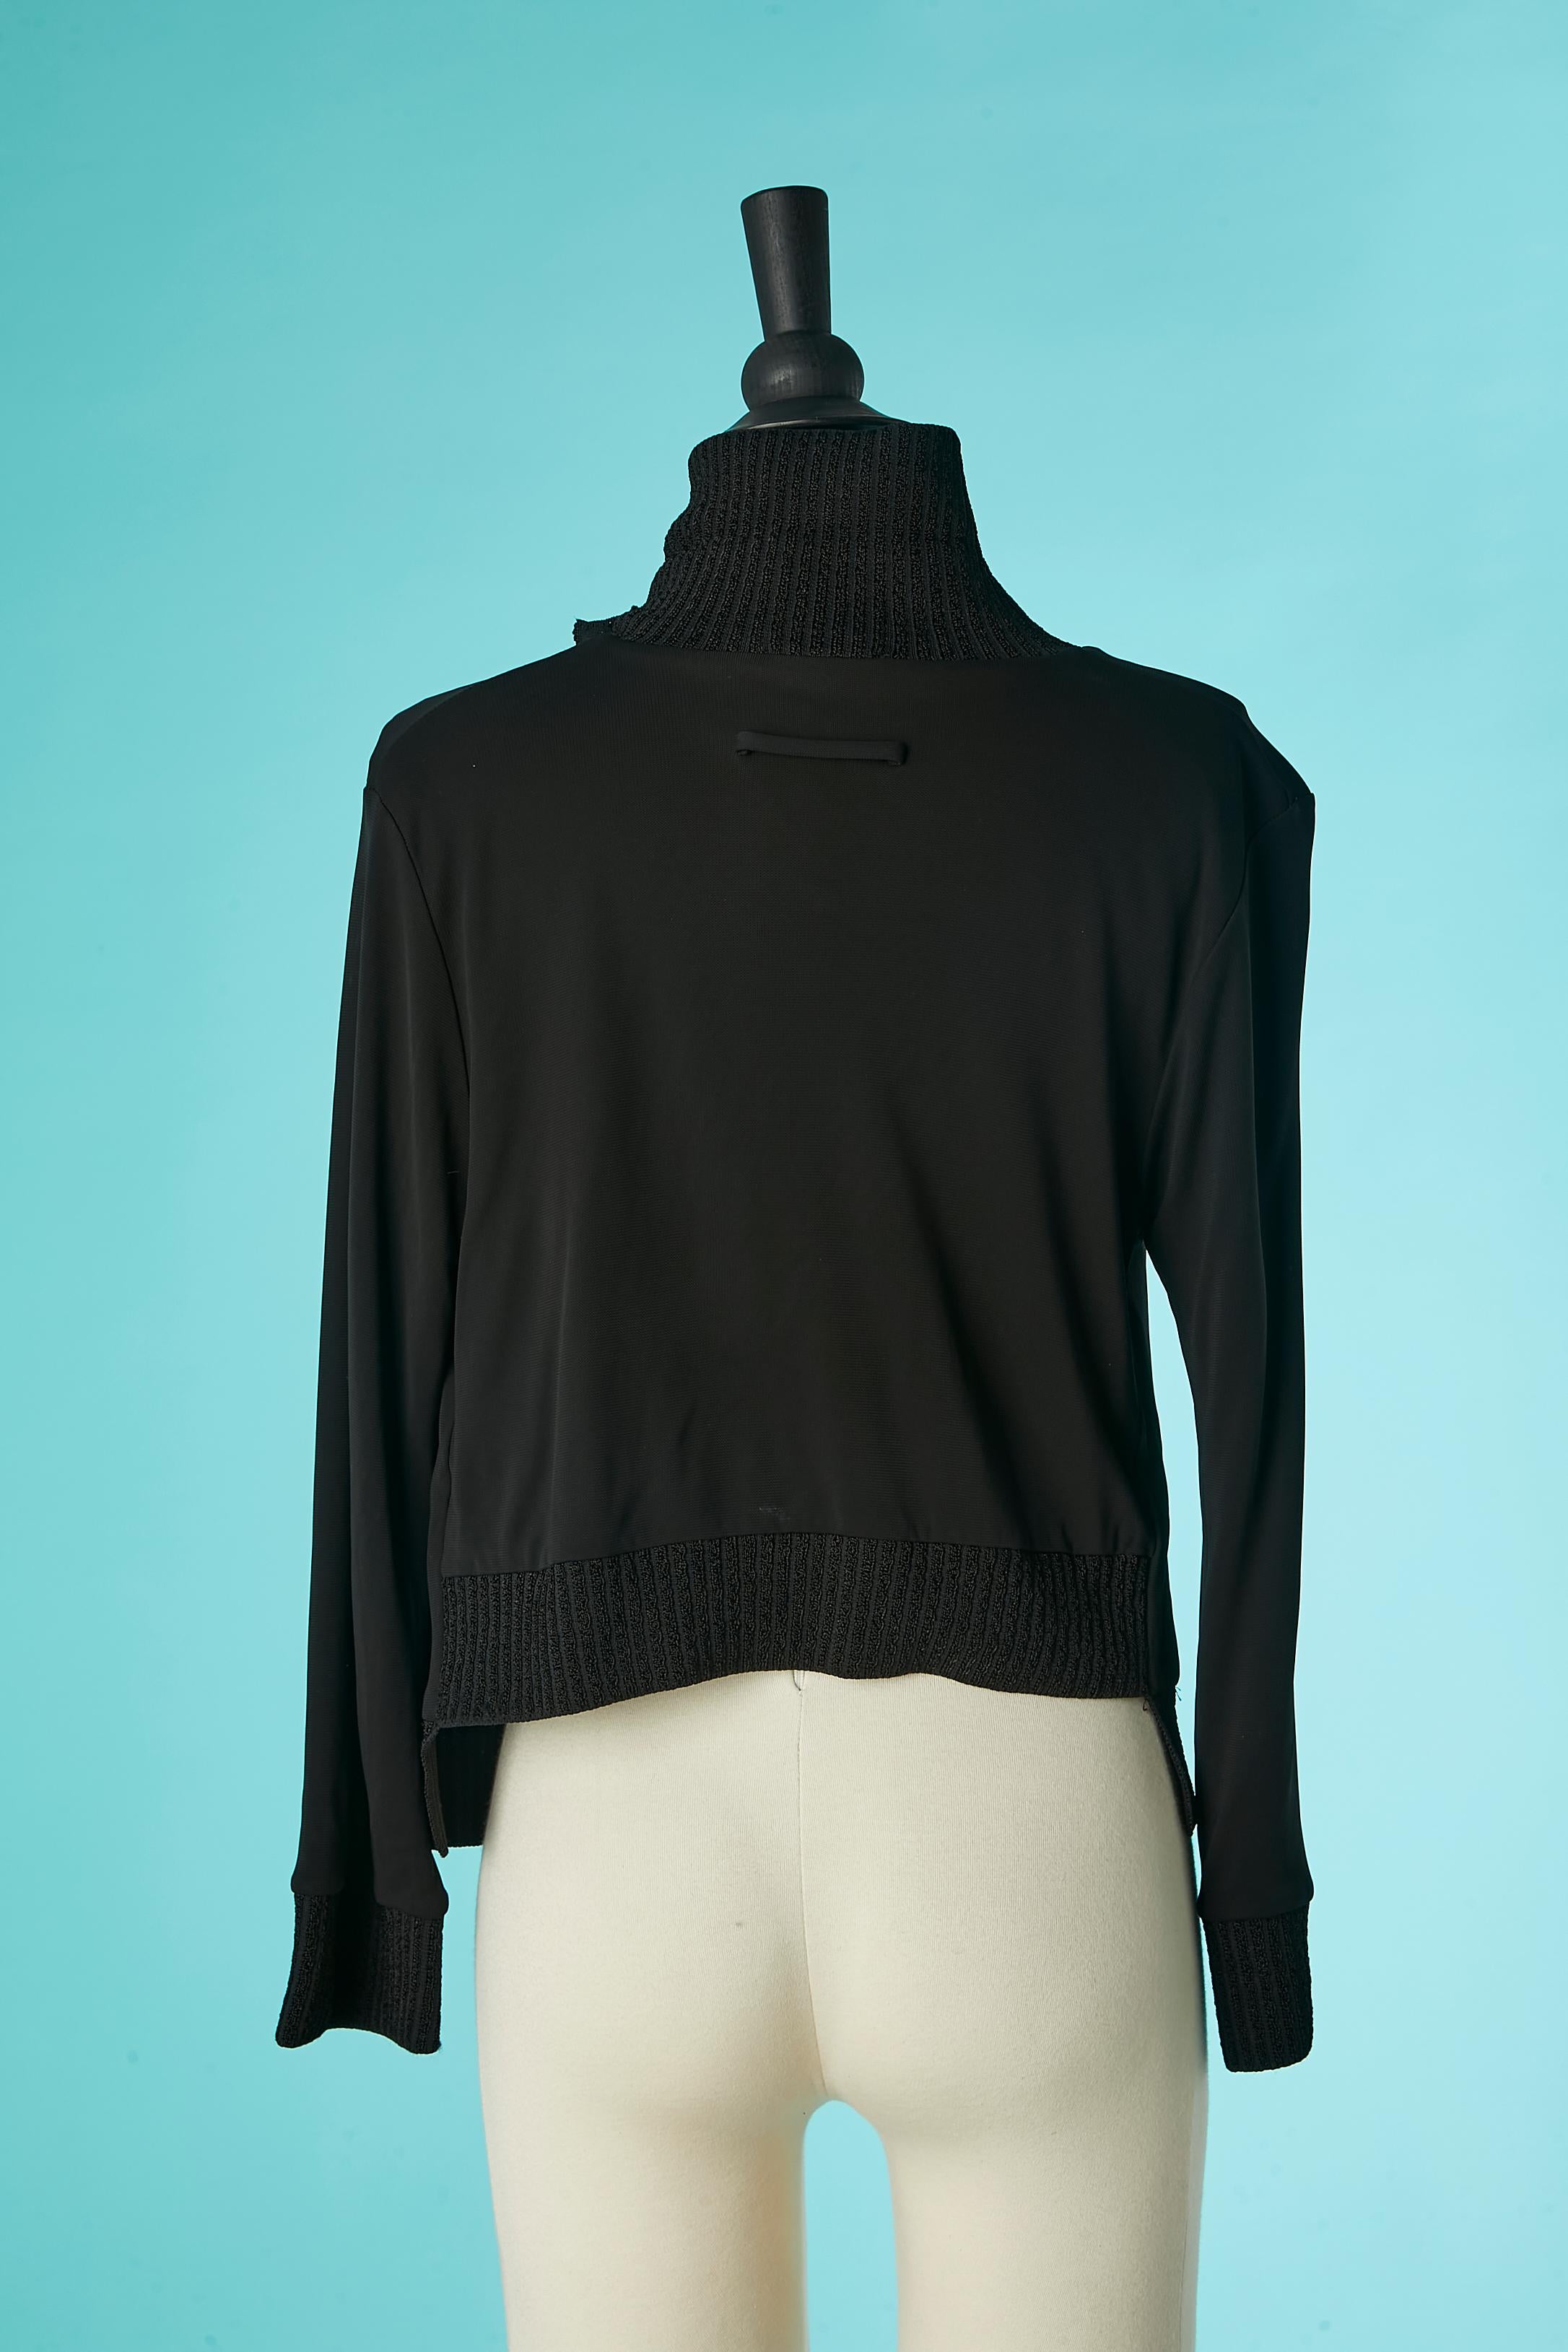 Asymmetrical  black rayon jersey jacket   Jean-Paul Gaultier Maille Femme  For Sale 1